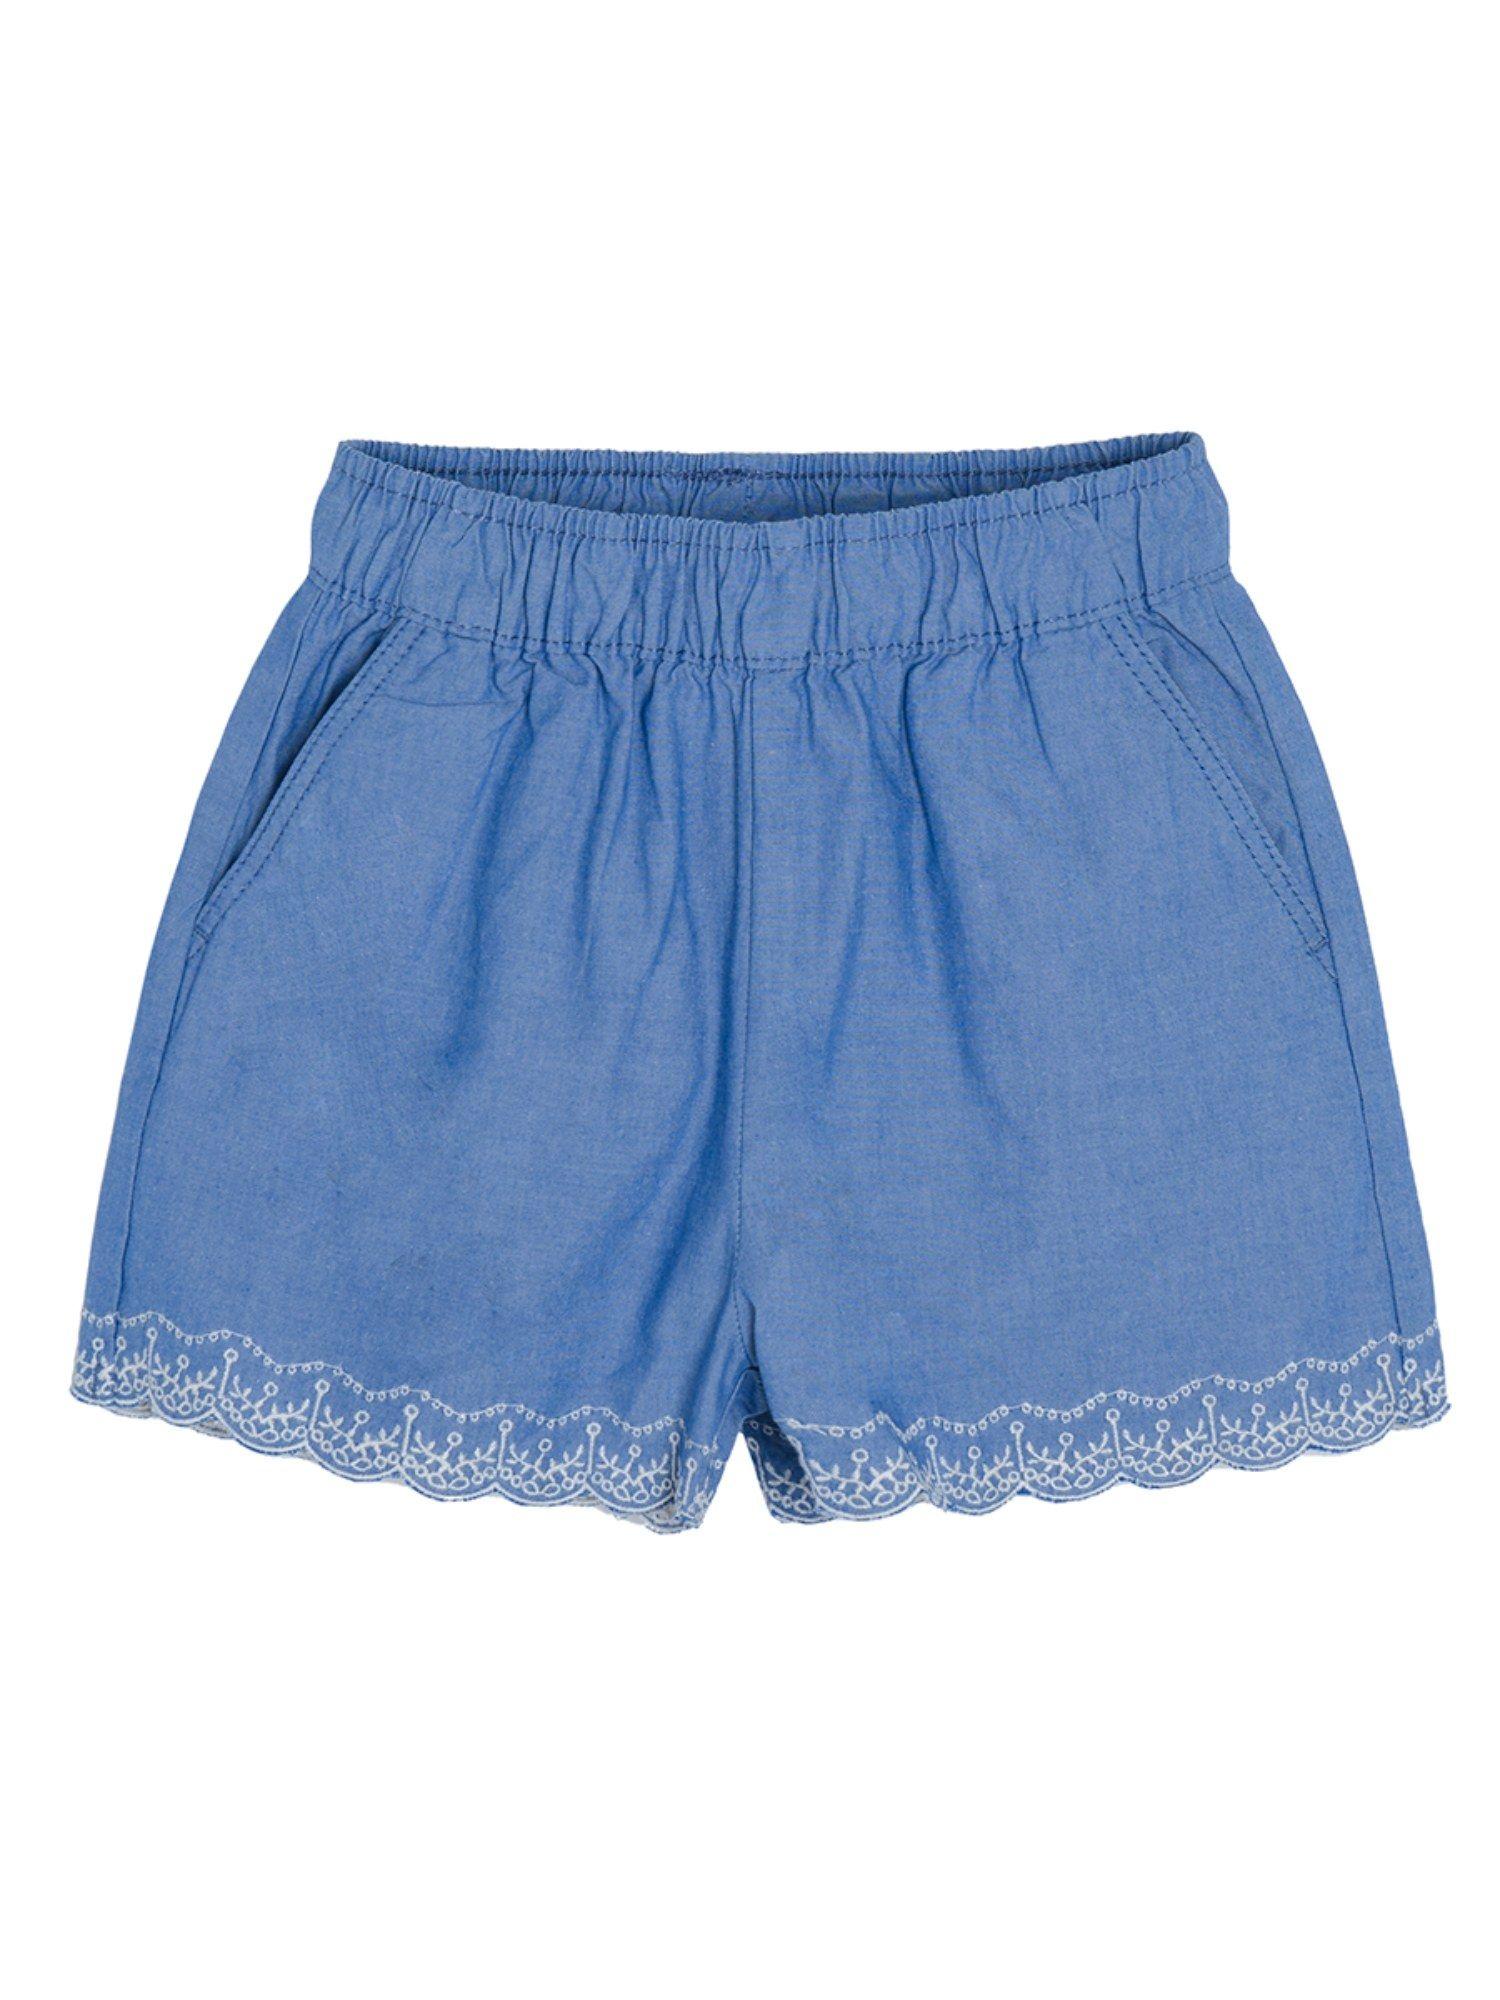 smyk girls blue woven shorts